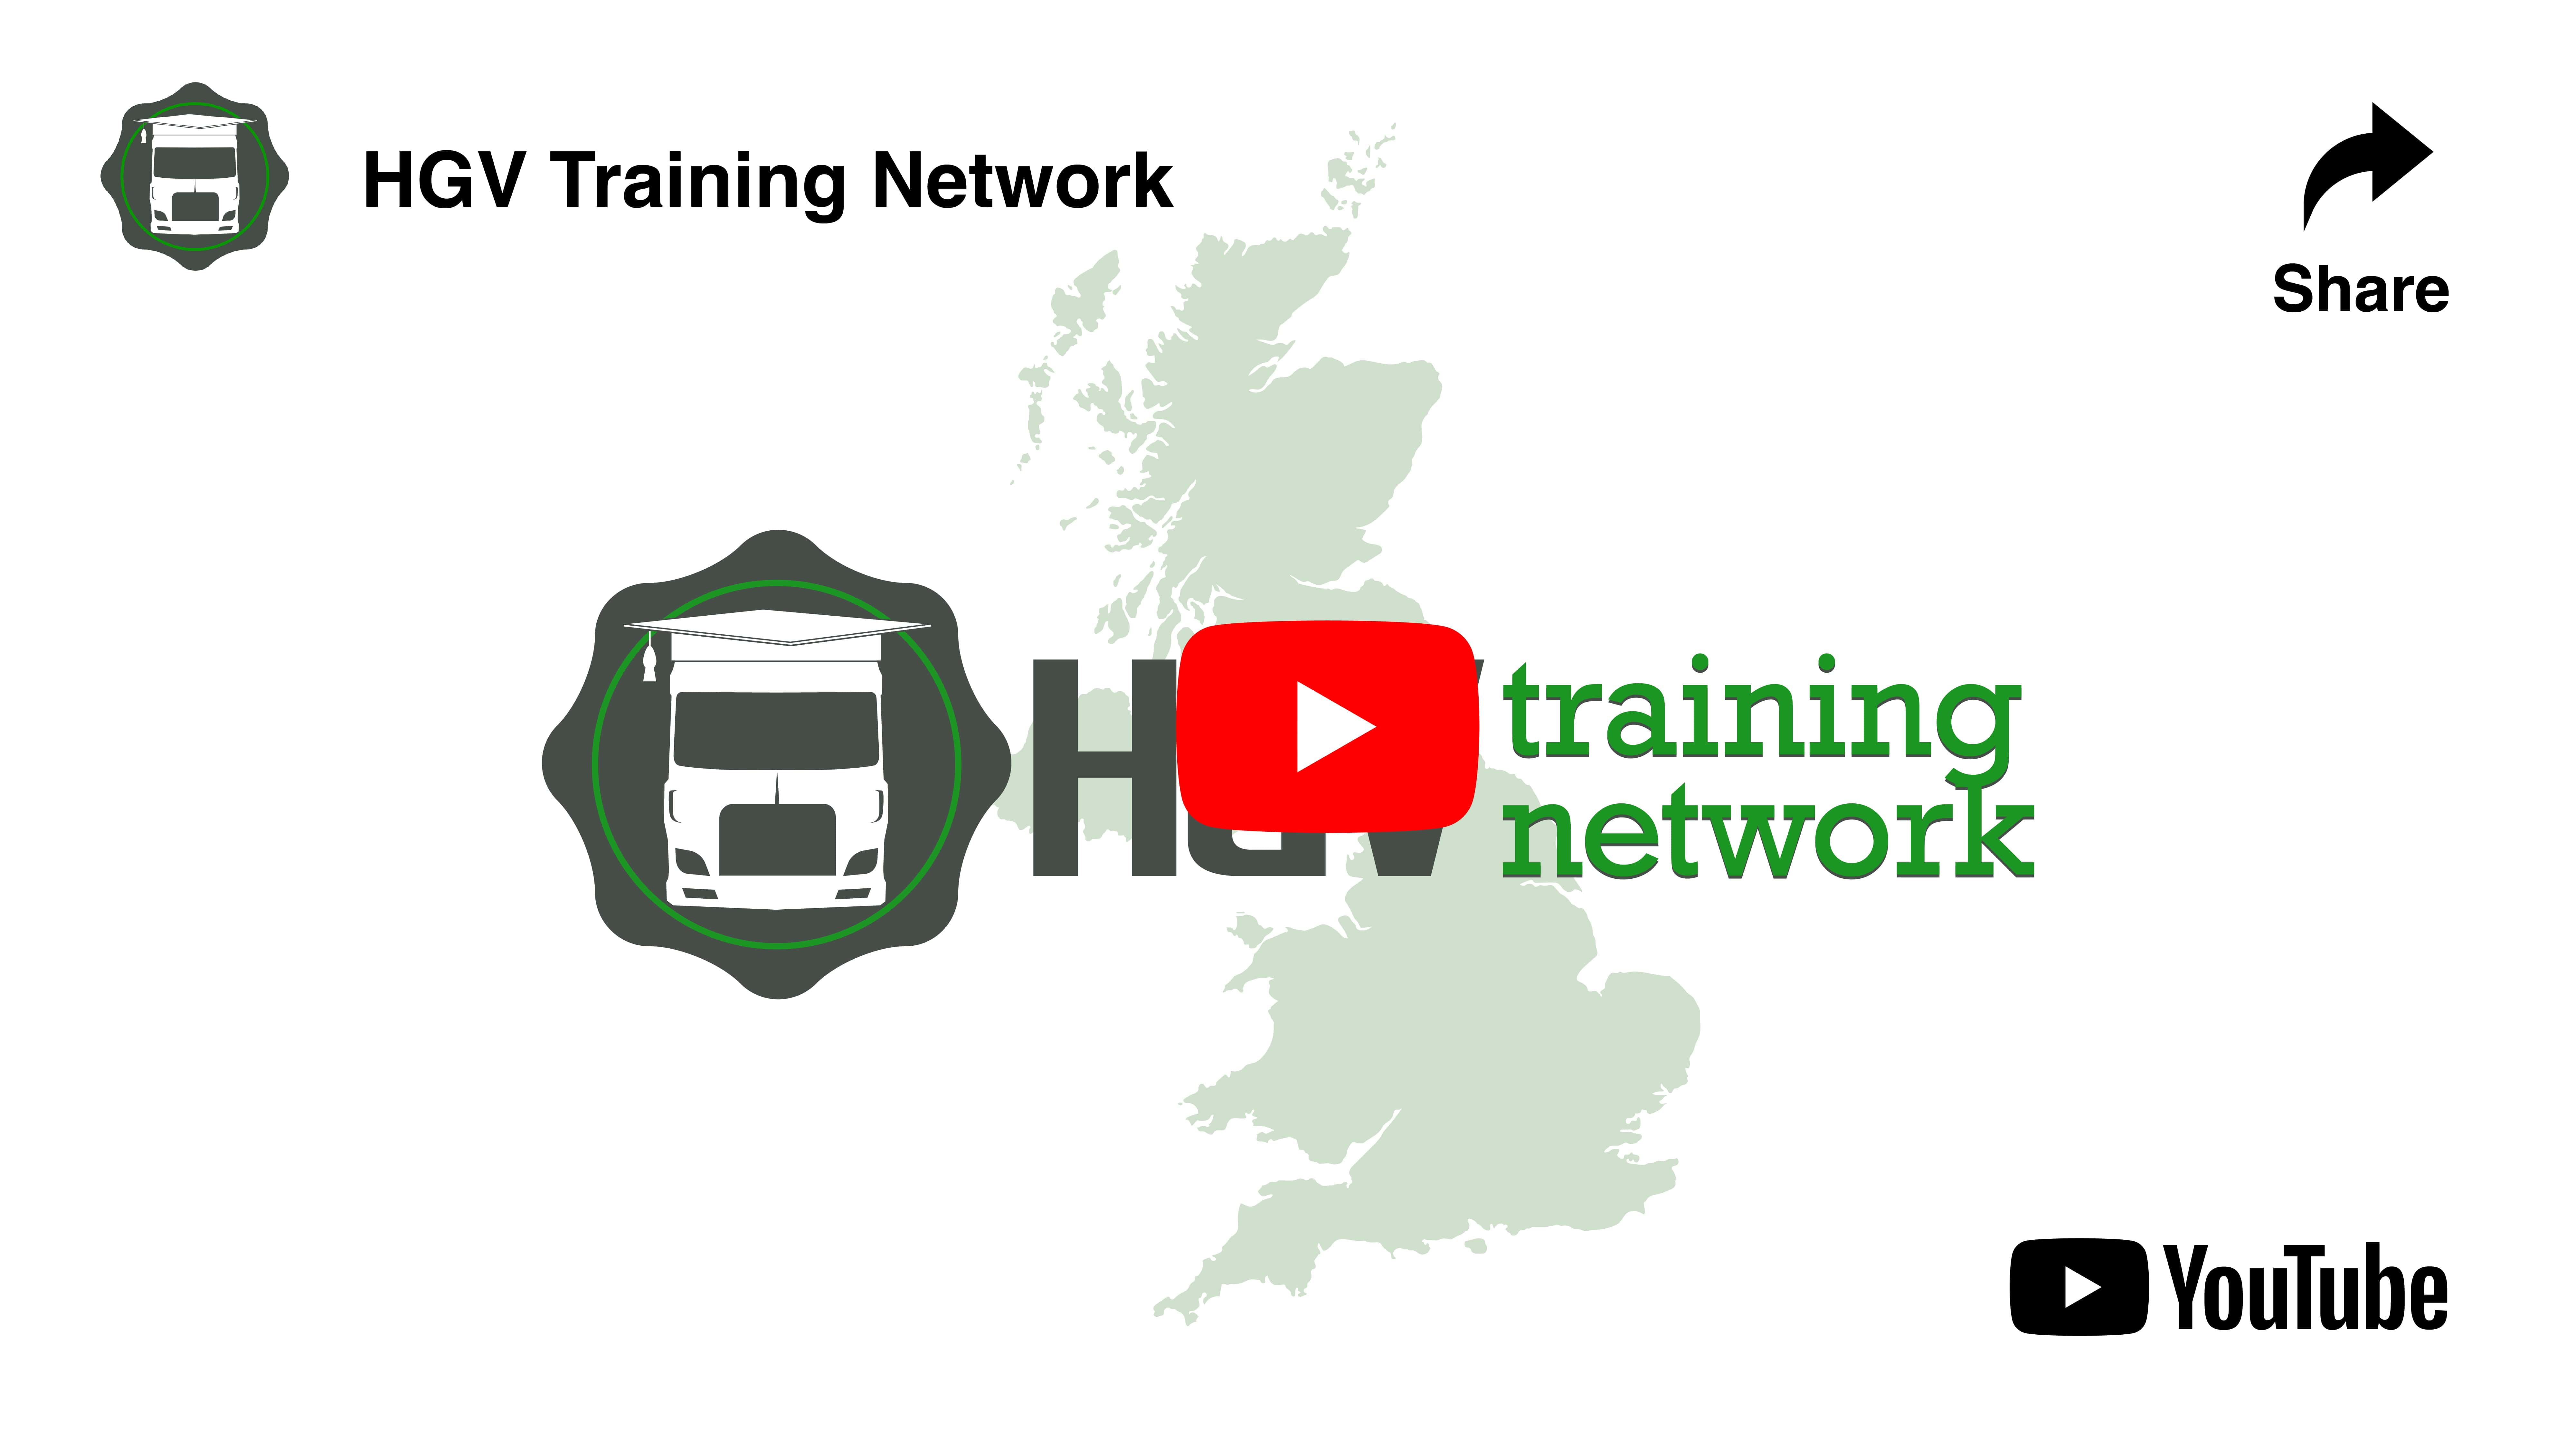 HGV Training Network Training